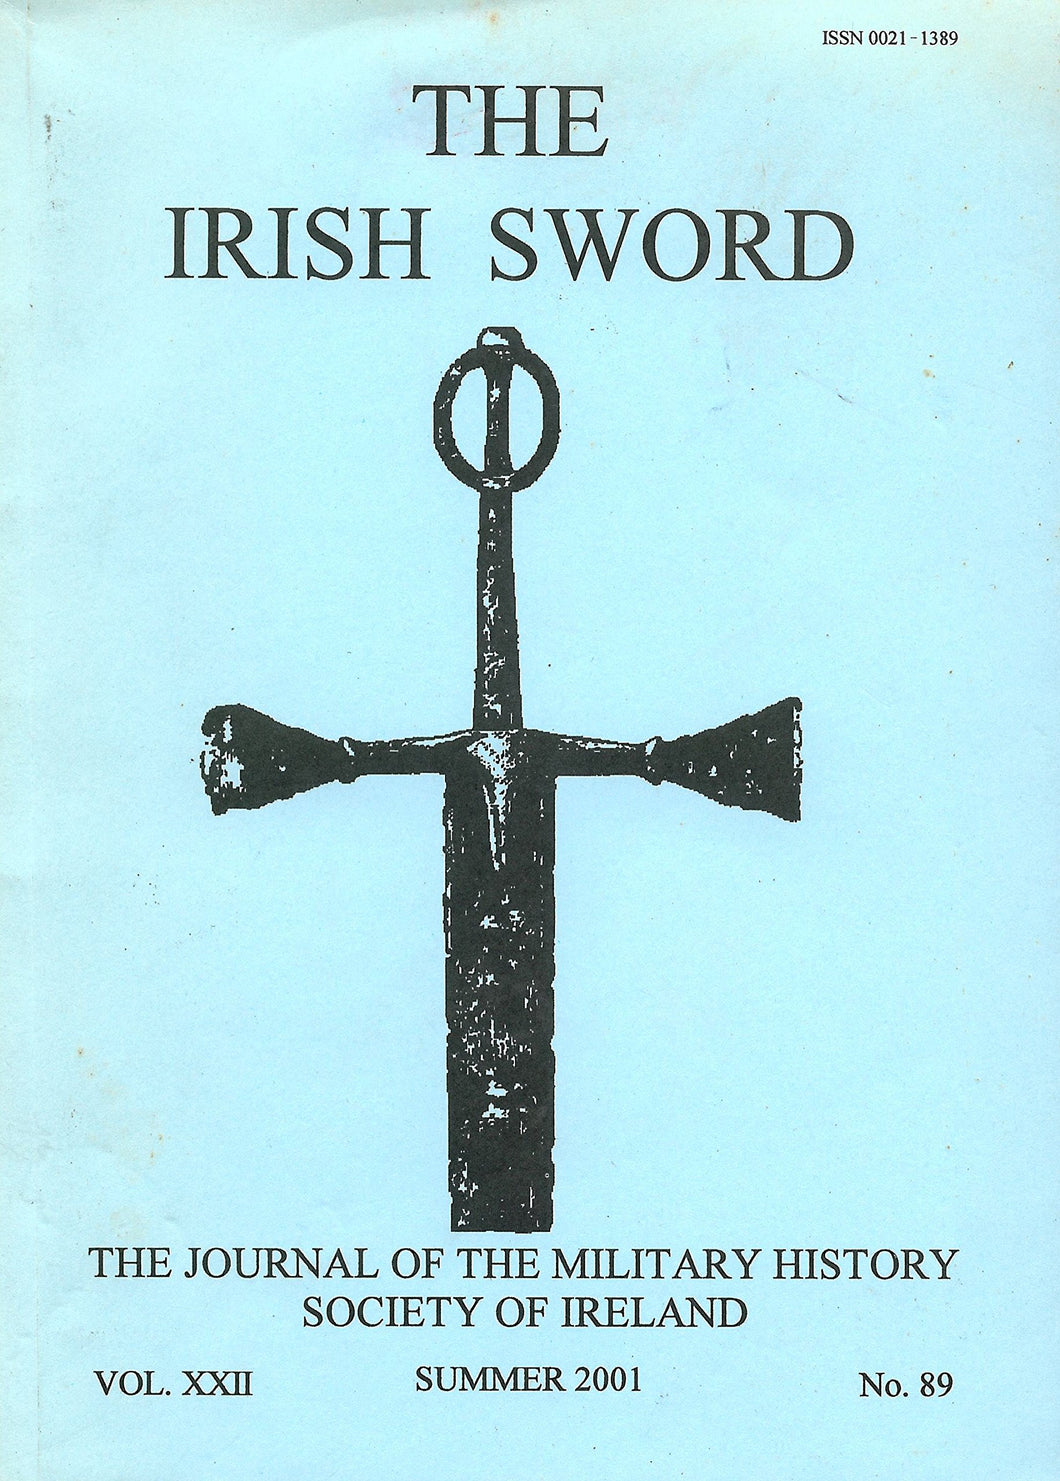 The Irish Sword: The Journal of the Military History Society of Ireland - Vol. XXII, No. 89, Summer 2001